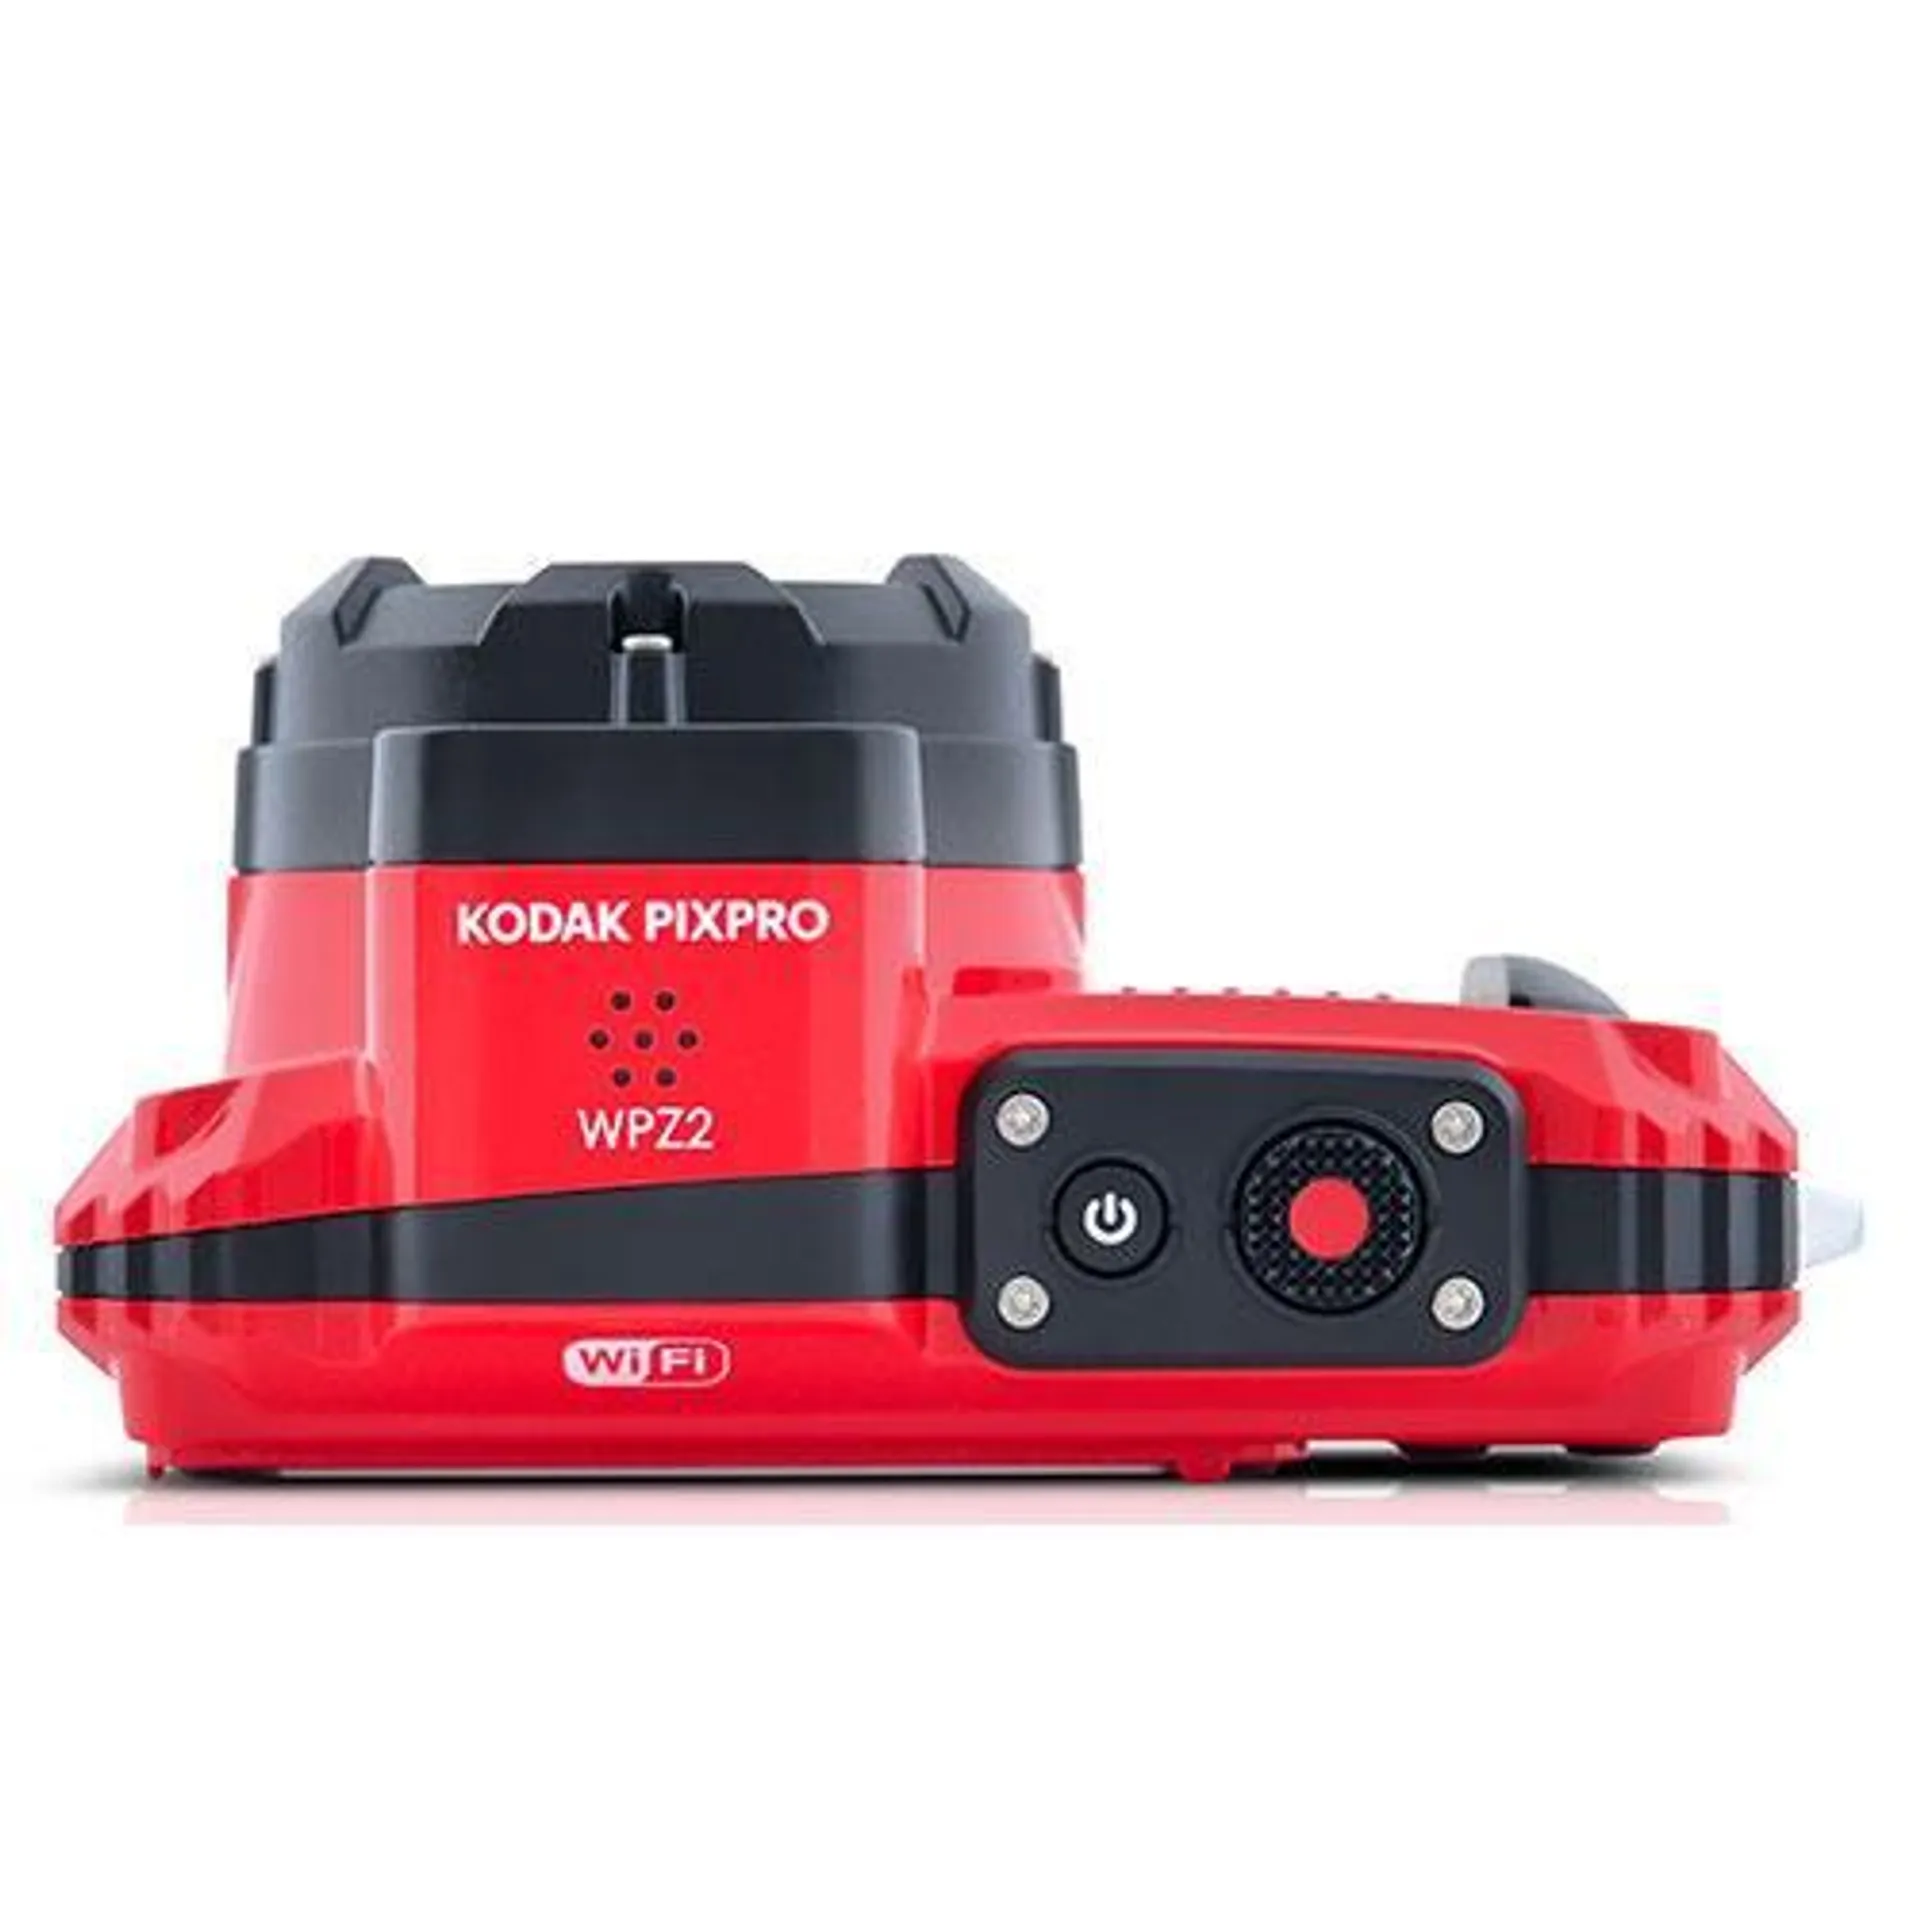 Kodak Pixpro WPZ2 Digital Camera in Red